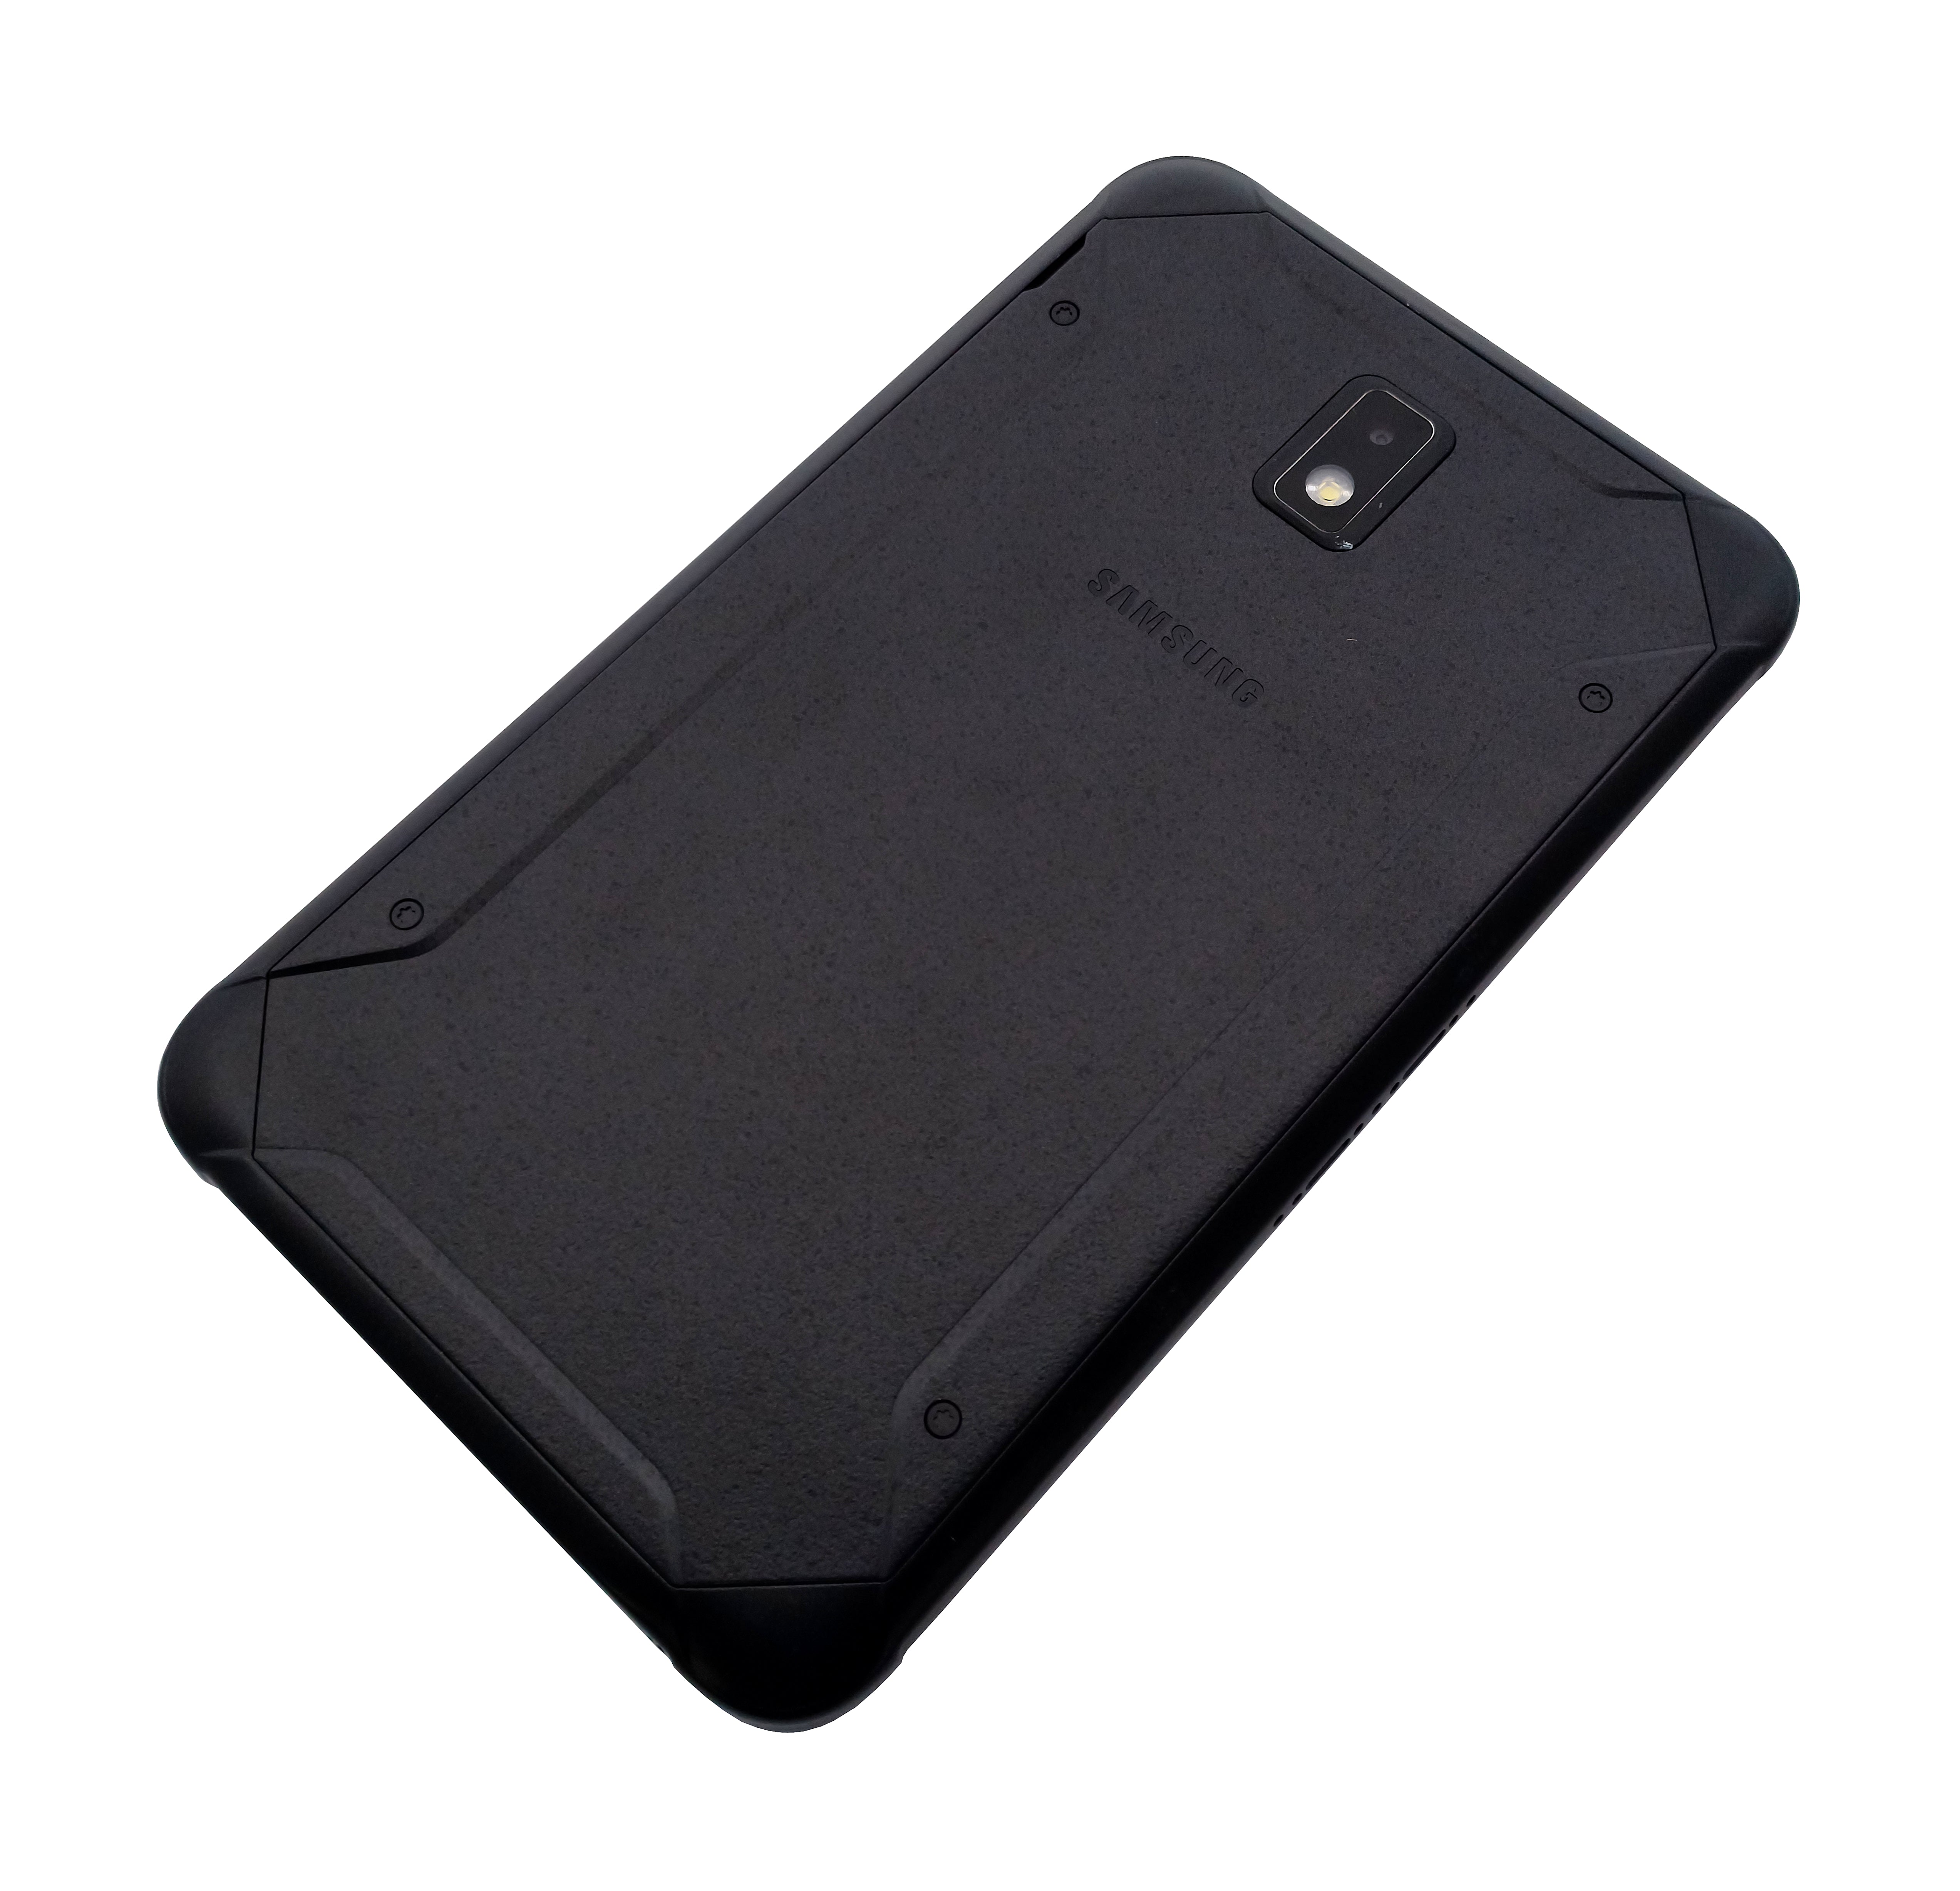 Samsung Galaxy Tab Active 2 Tablet, 16GB, Unlocked, Black, SM-T395